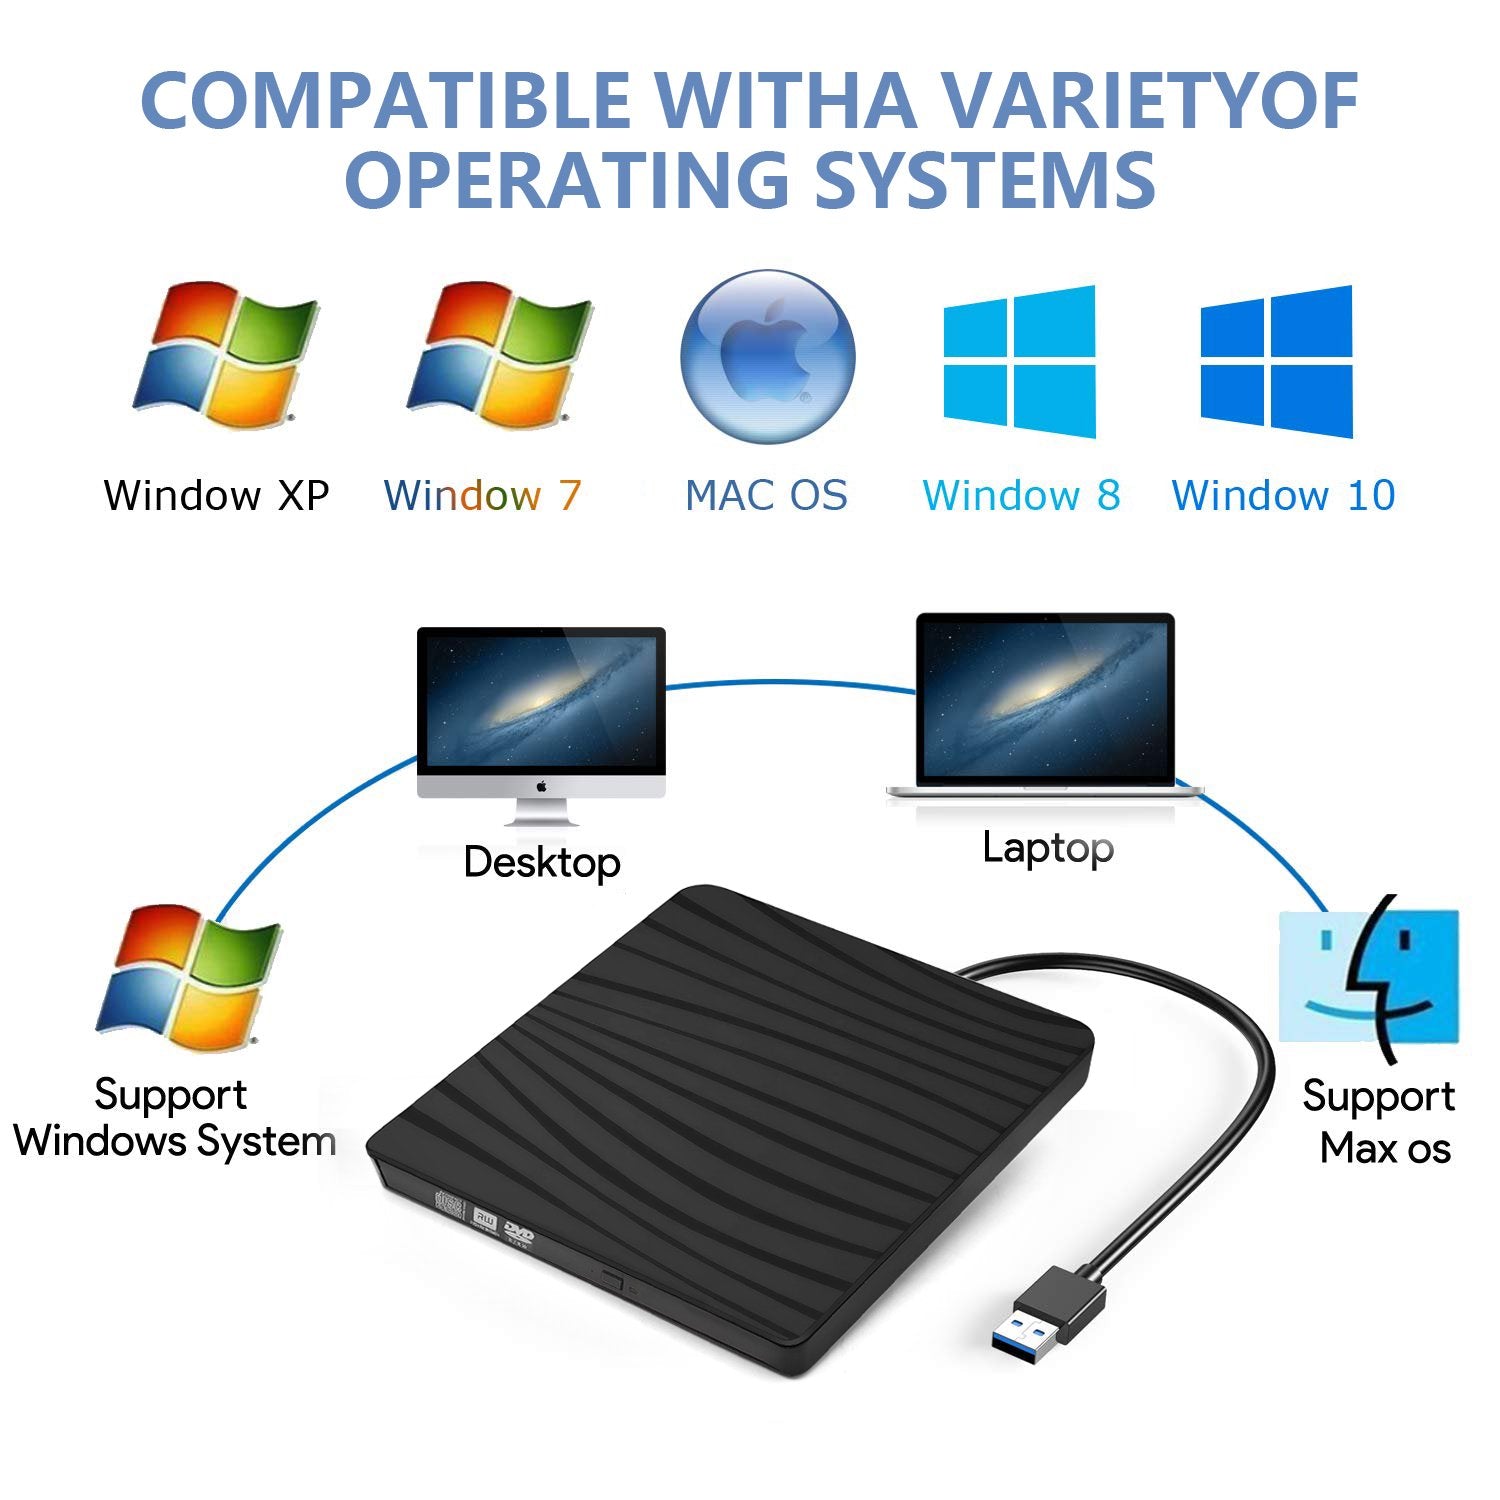 External DVD Drive, Vinsic USB 3.0 Type-C Portable CD/DVD+/-RW Drive/DVD Player for Laptop, CD Burner Compatible with Desktop PC Laptop Windows Linux OS Apple Mac